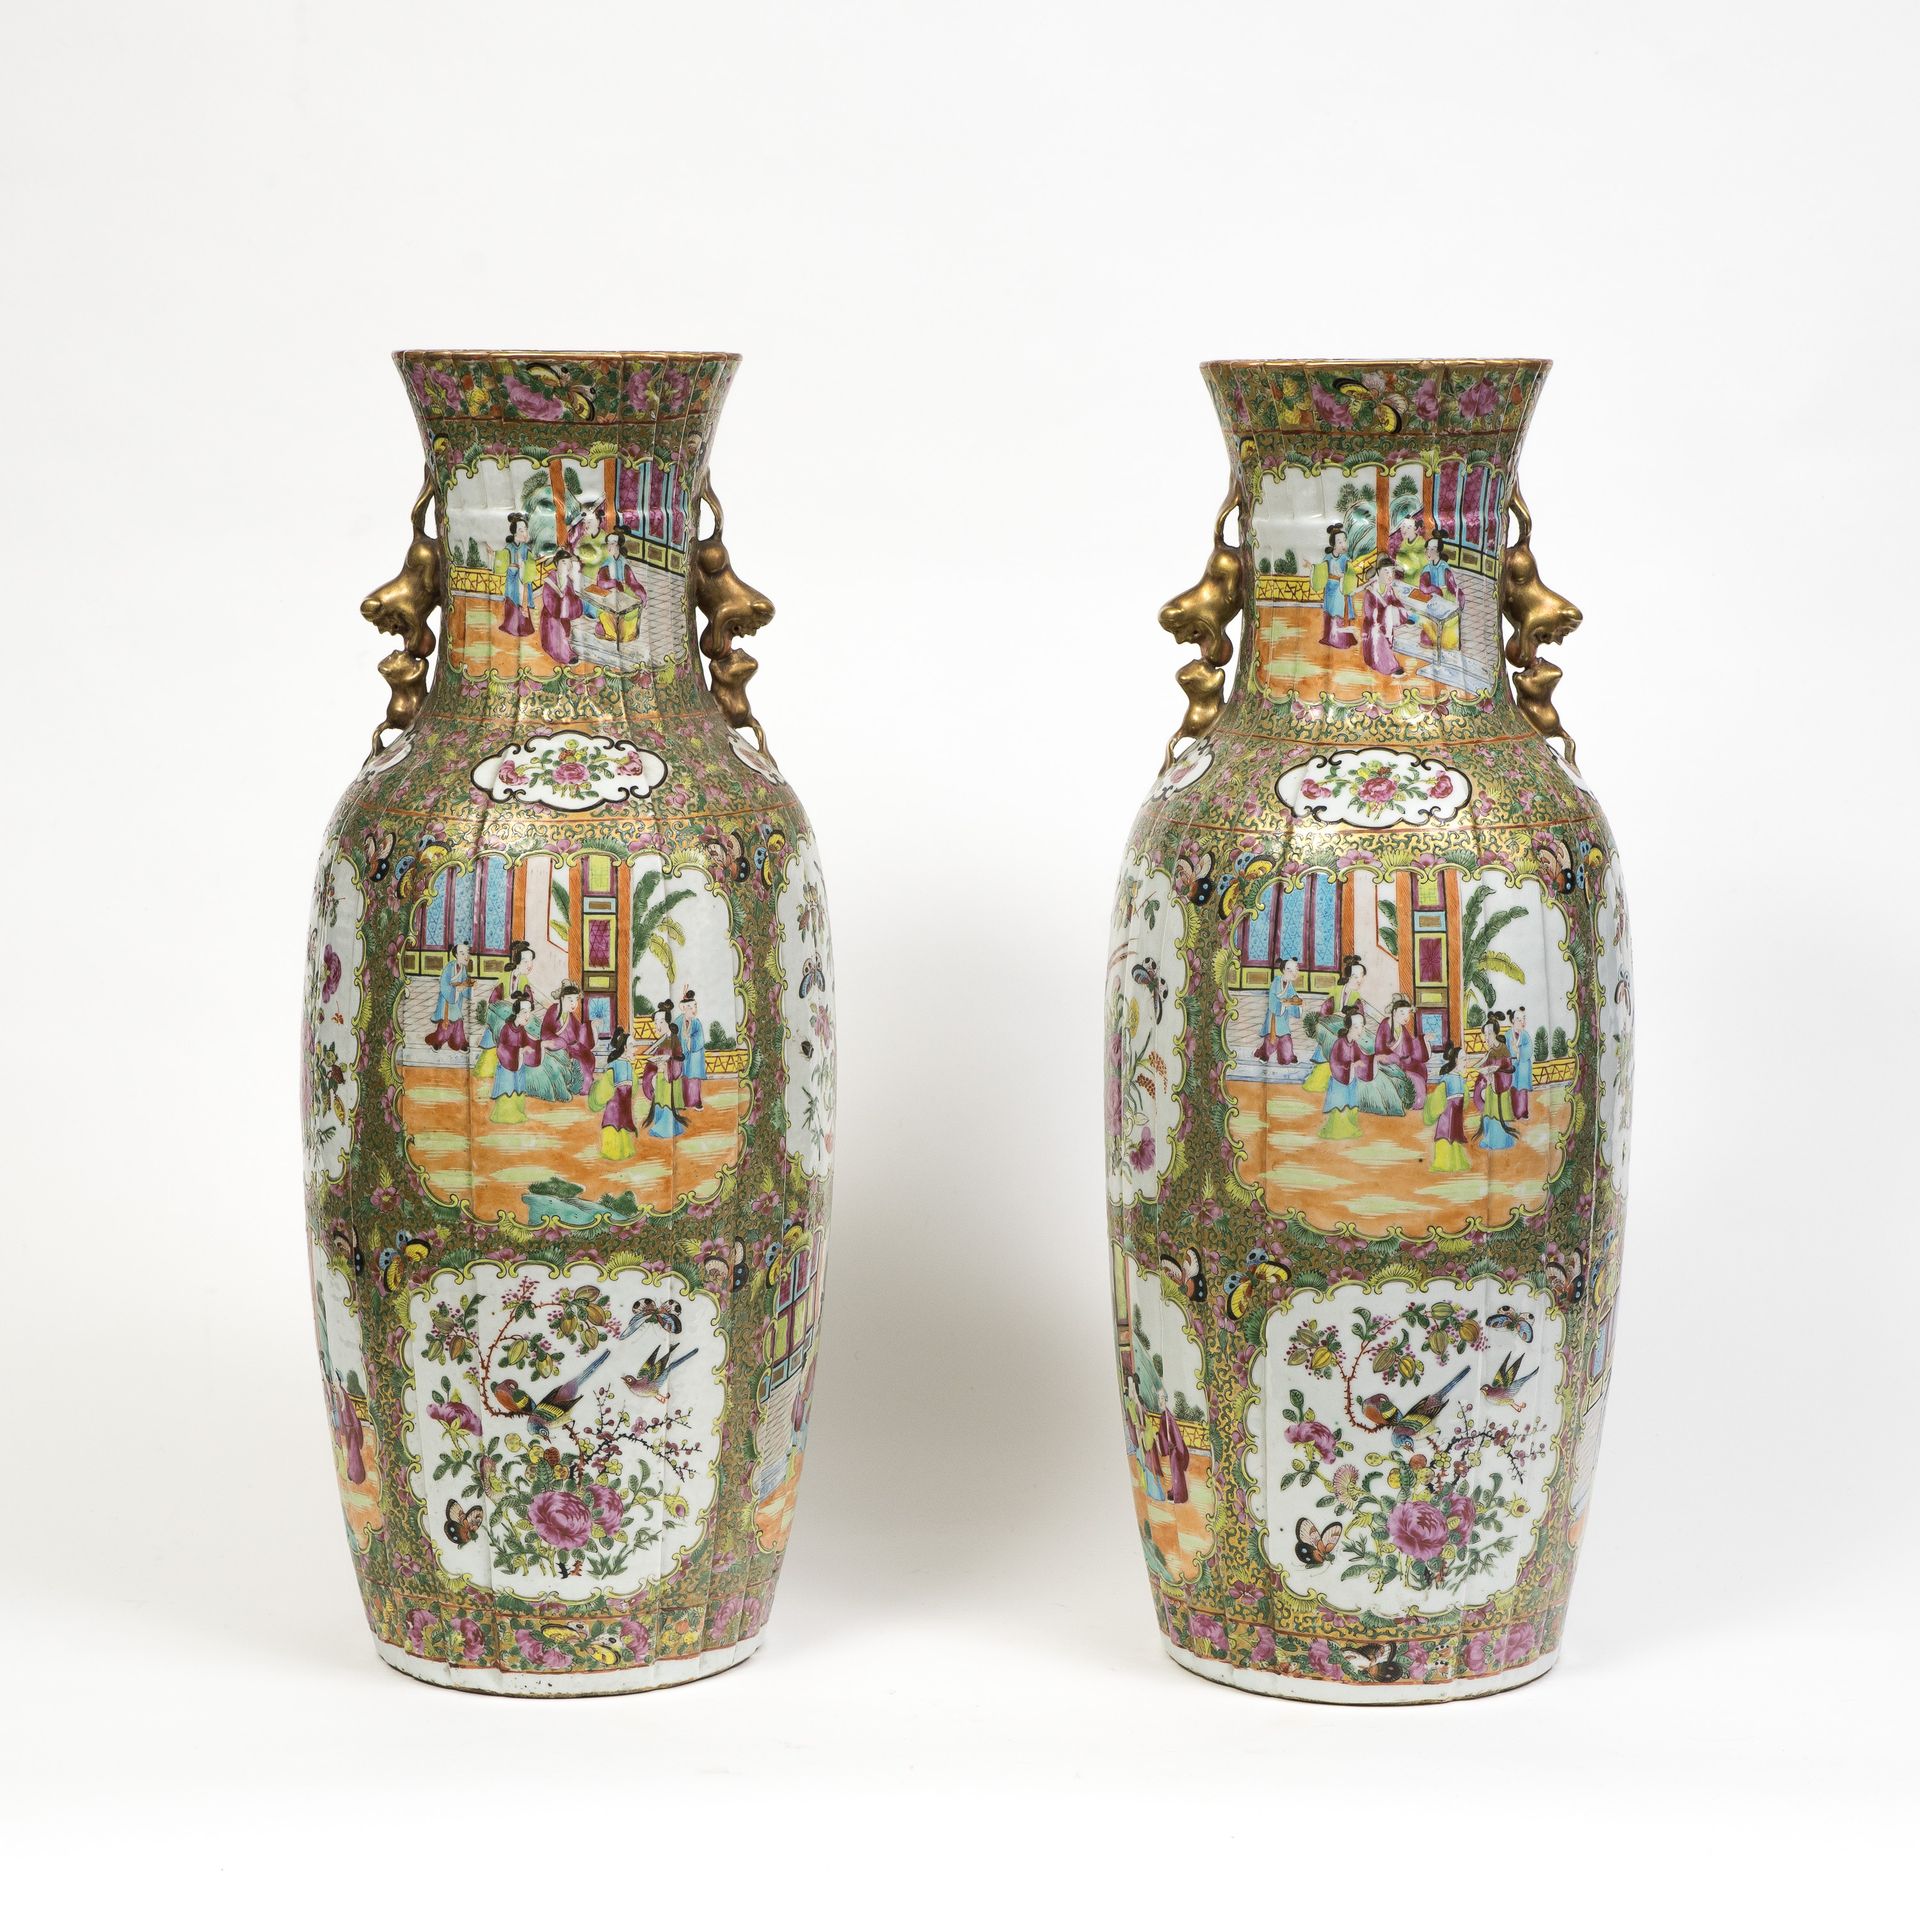 Null CHINA, KANTON - 19. JAHRHUNDERT

Paar große Vasen



Aus Porzellan, der Kor&hellip;